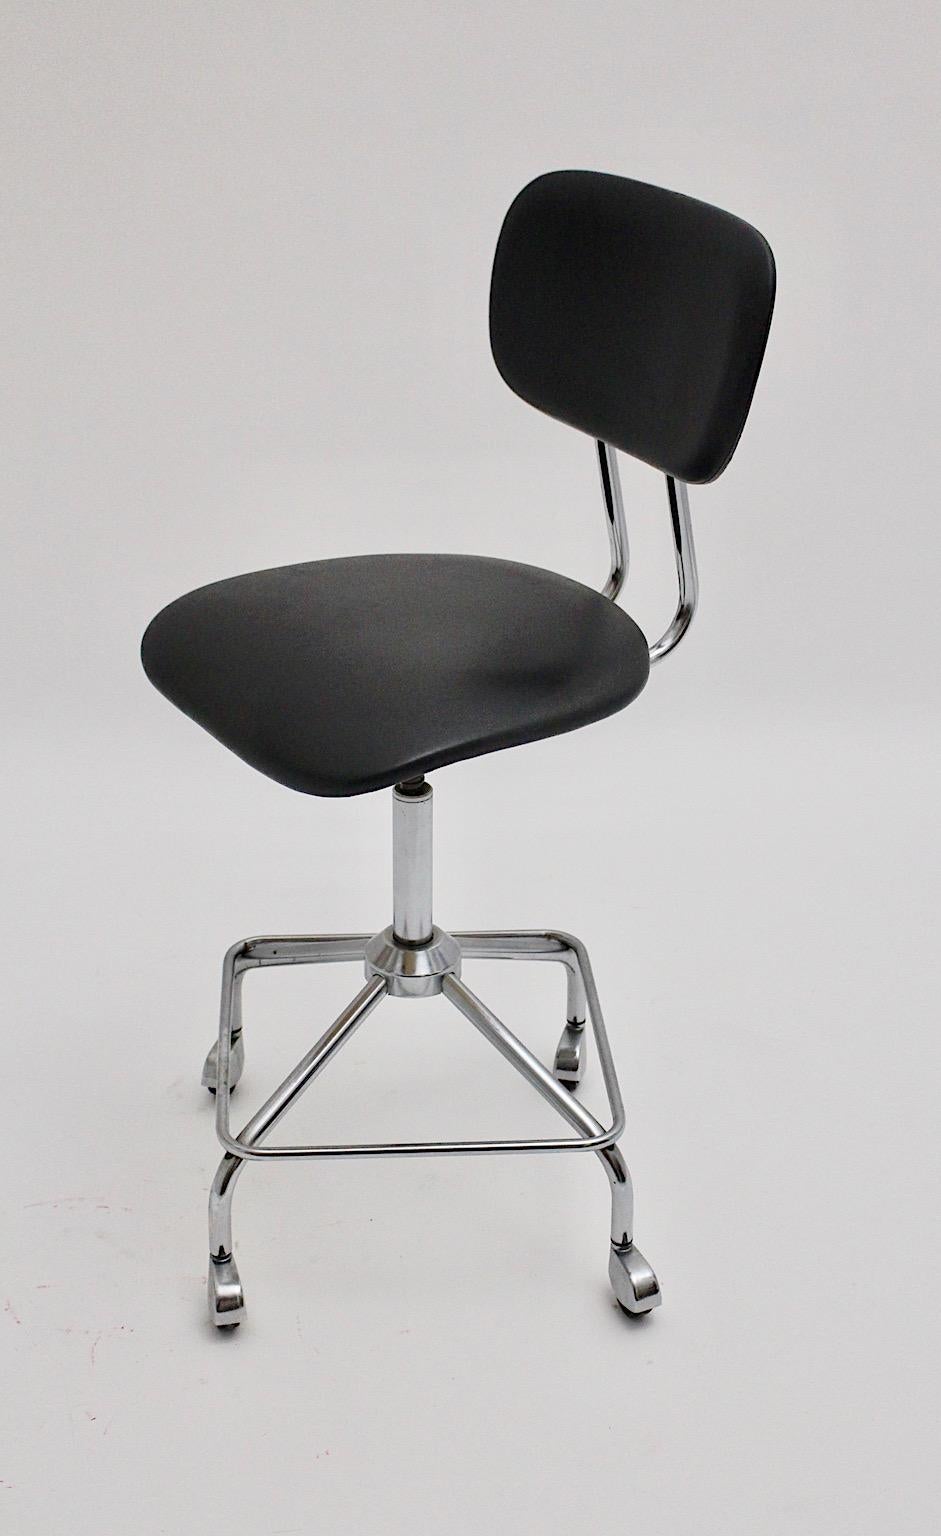 Metal Mid-Century Modern Vintage Chromed Black Desk Chair Office Chair, 1950s, Germany